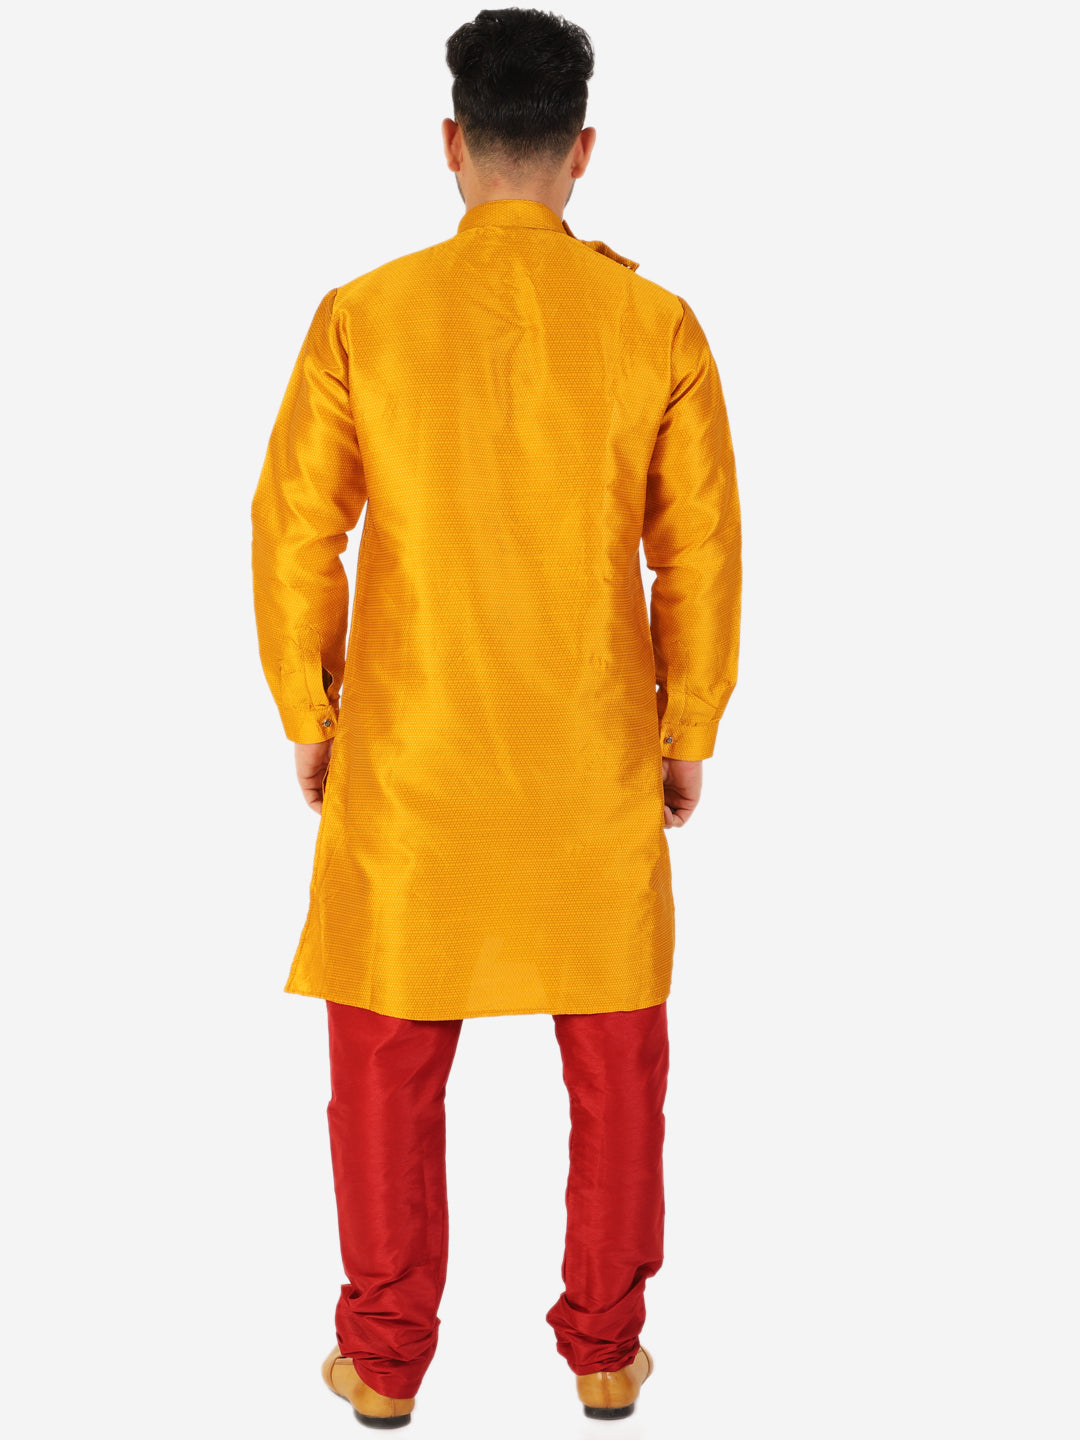 Pro Ethic Mustard Men's Kurta Pajama Silk Self Design (A-102)